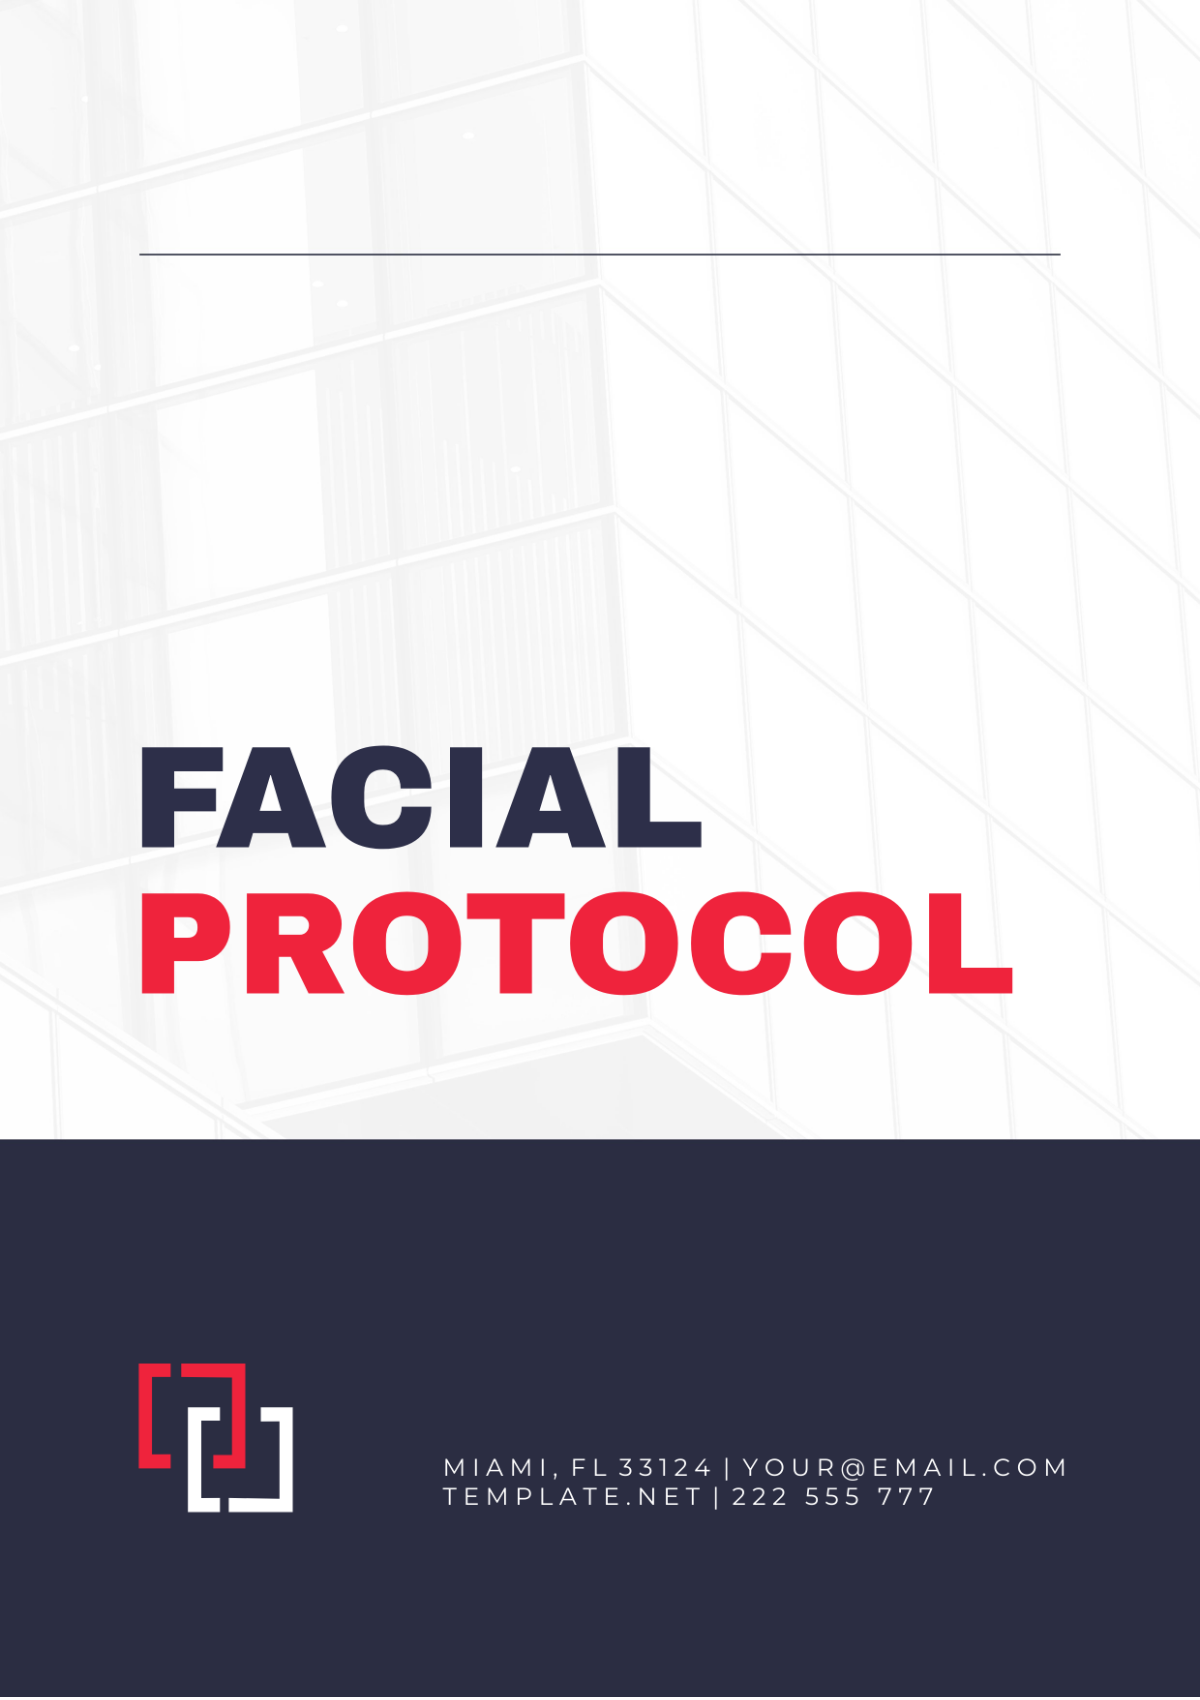 Free Facial Protocol Template